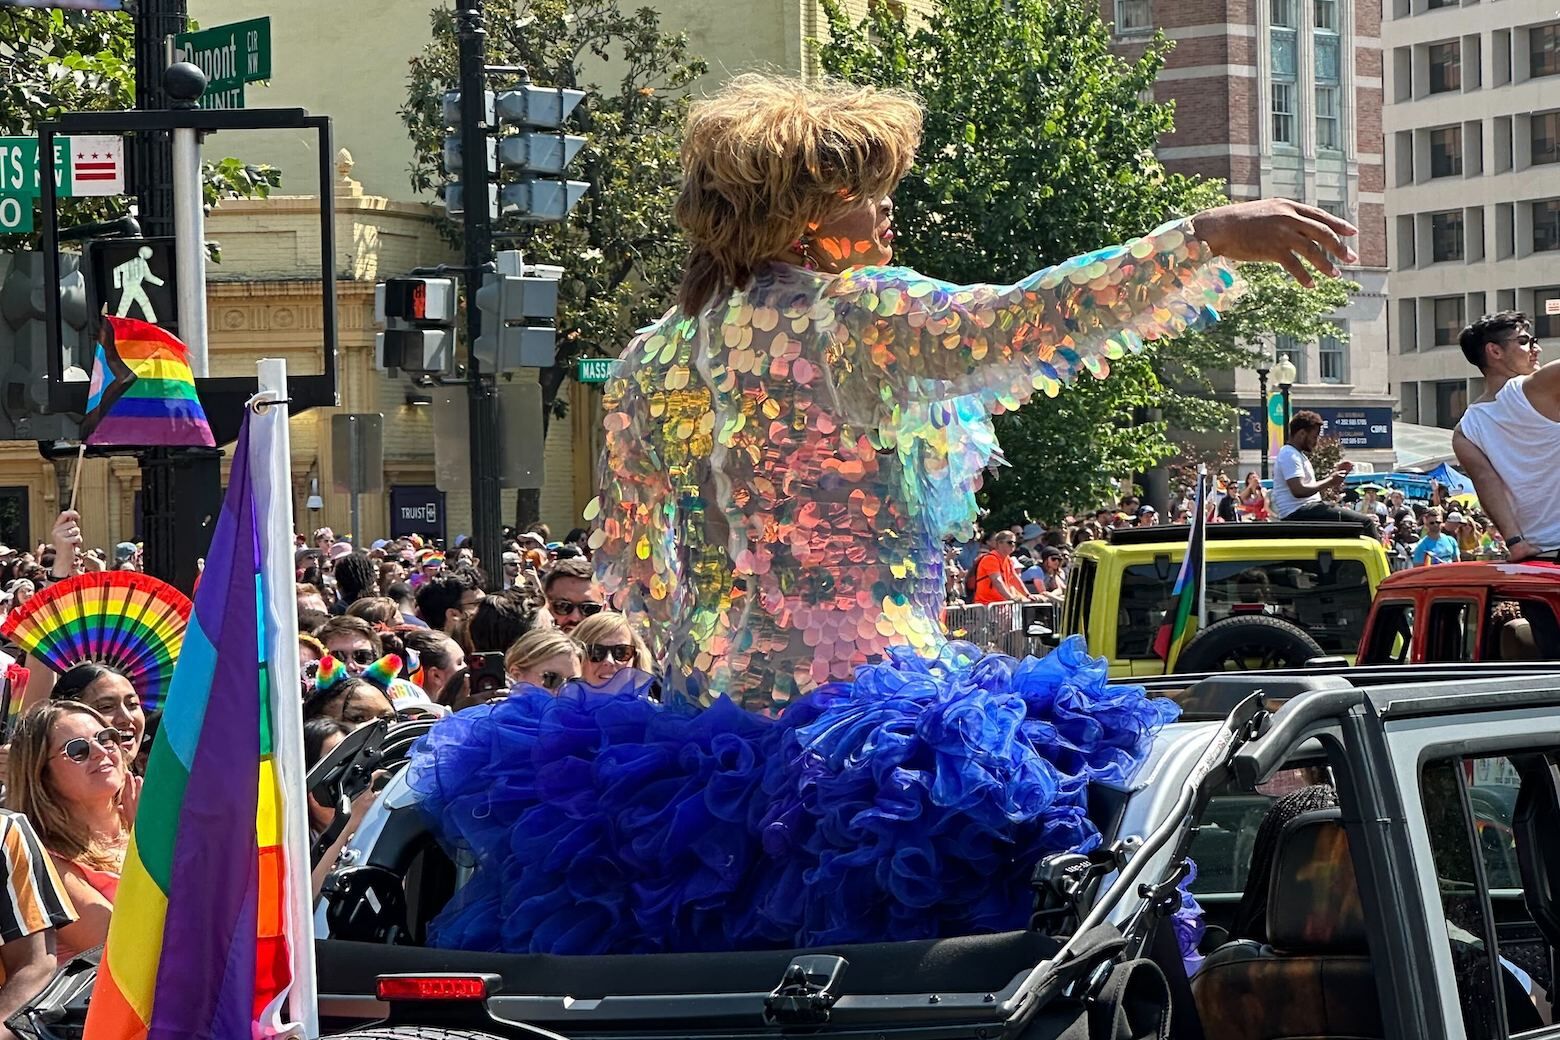 Washington Wizards to Celebrate Pride on March 28